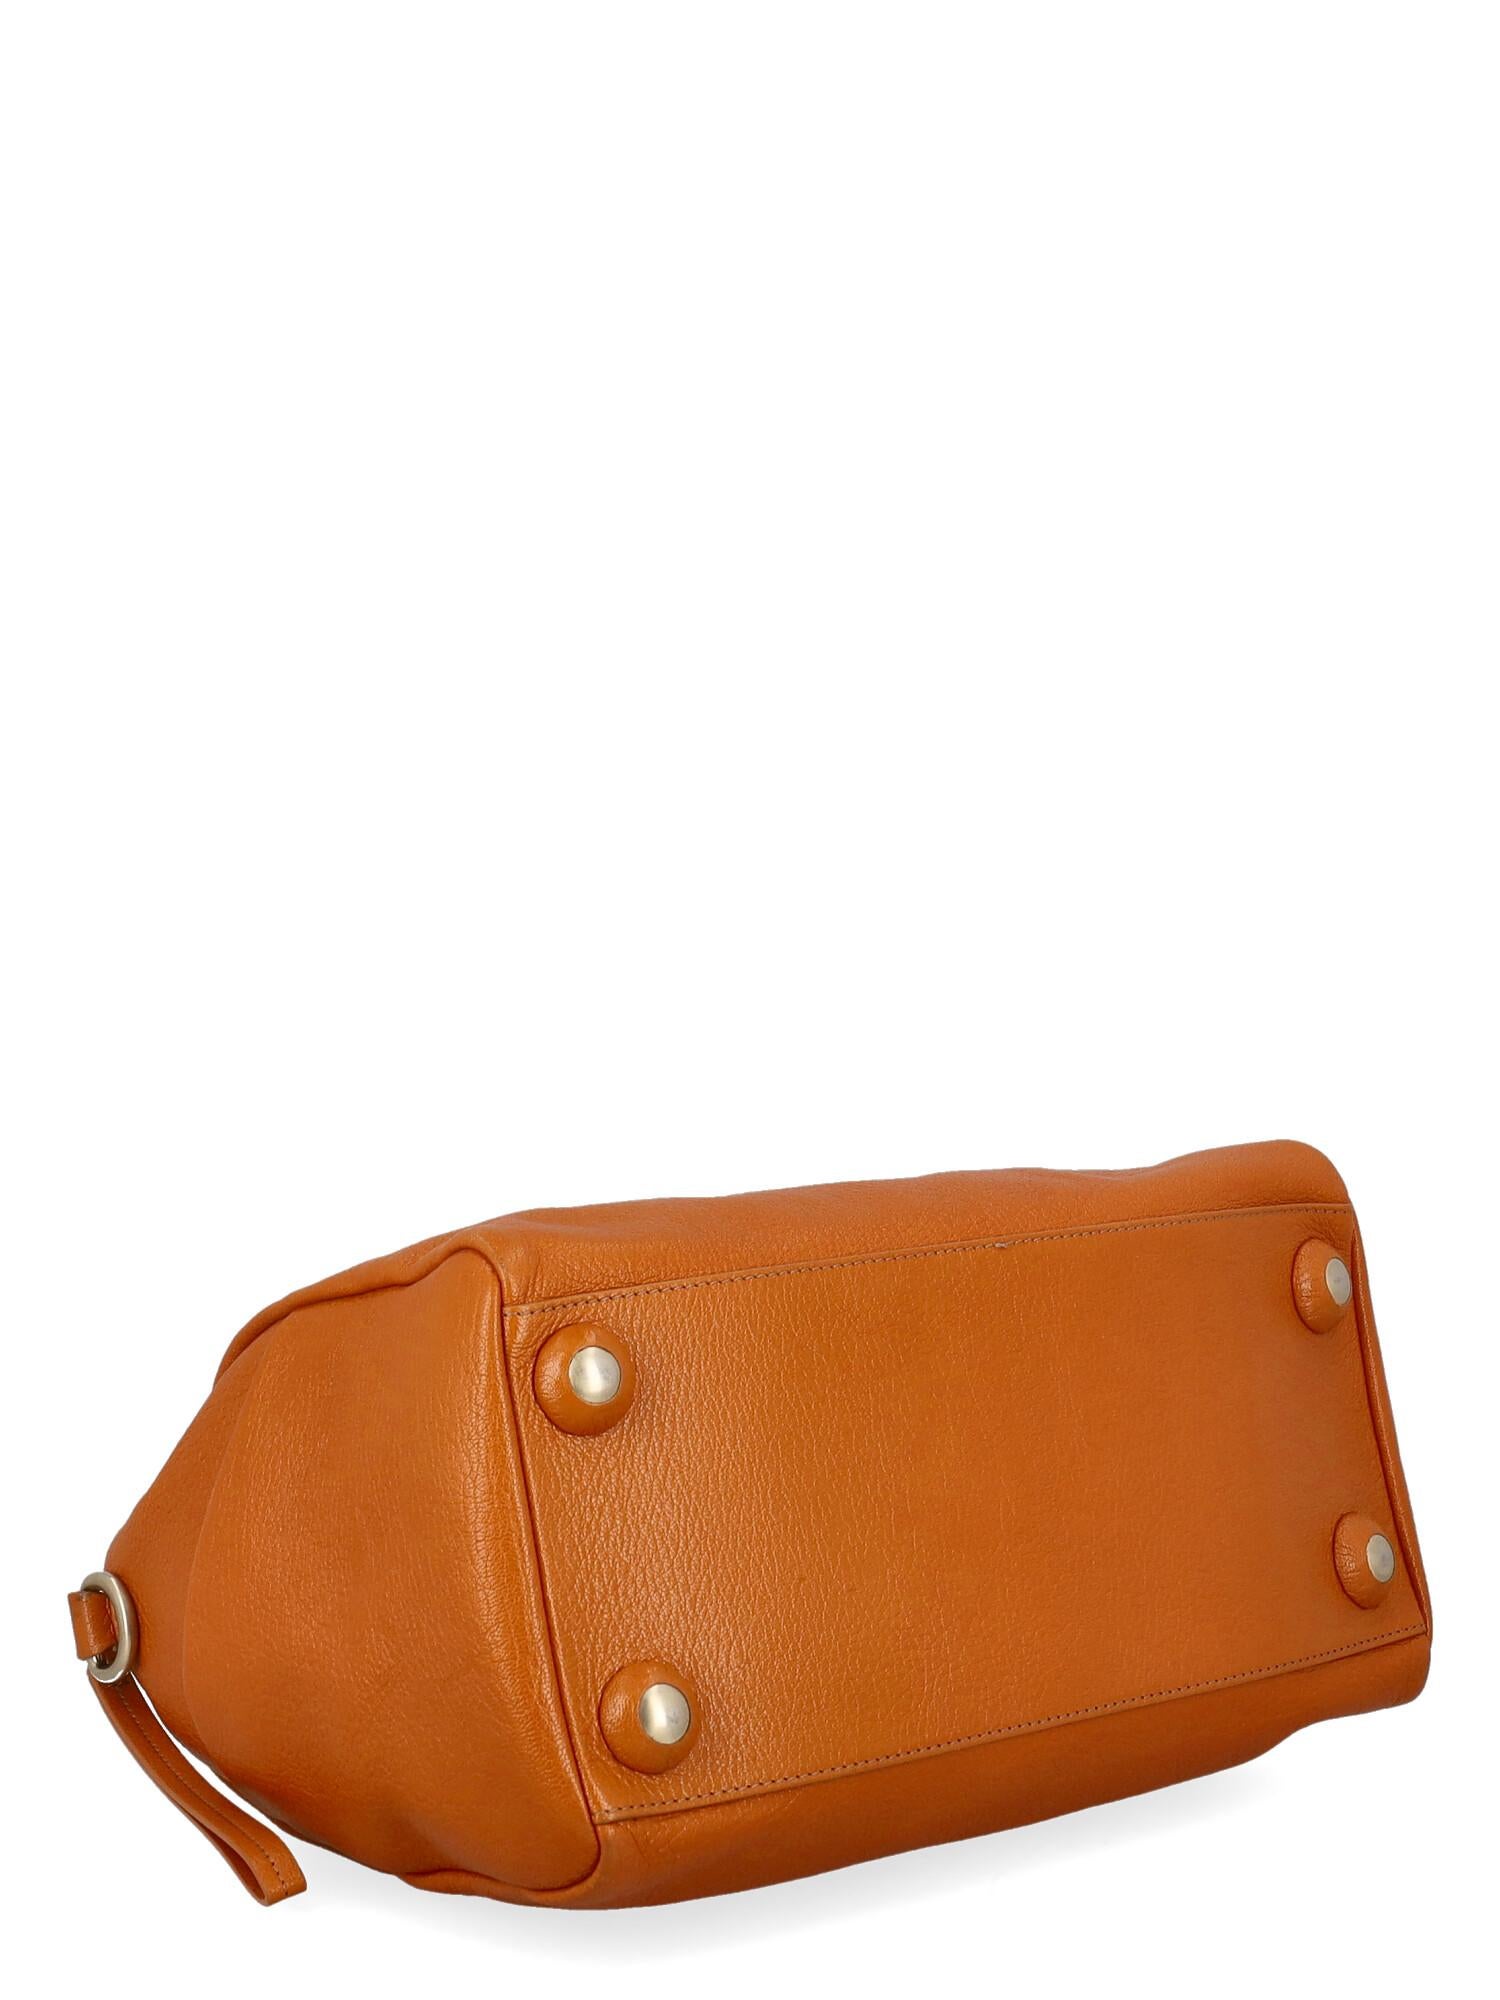 Women's Corto Moltedo Women Handbags Orange Leather  For Sale